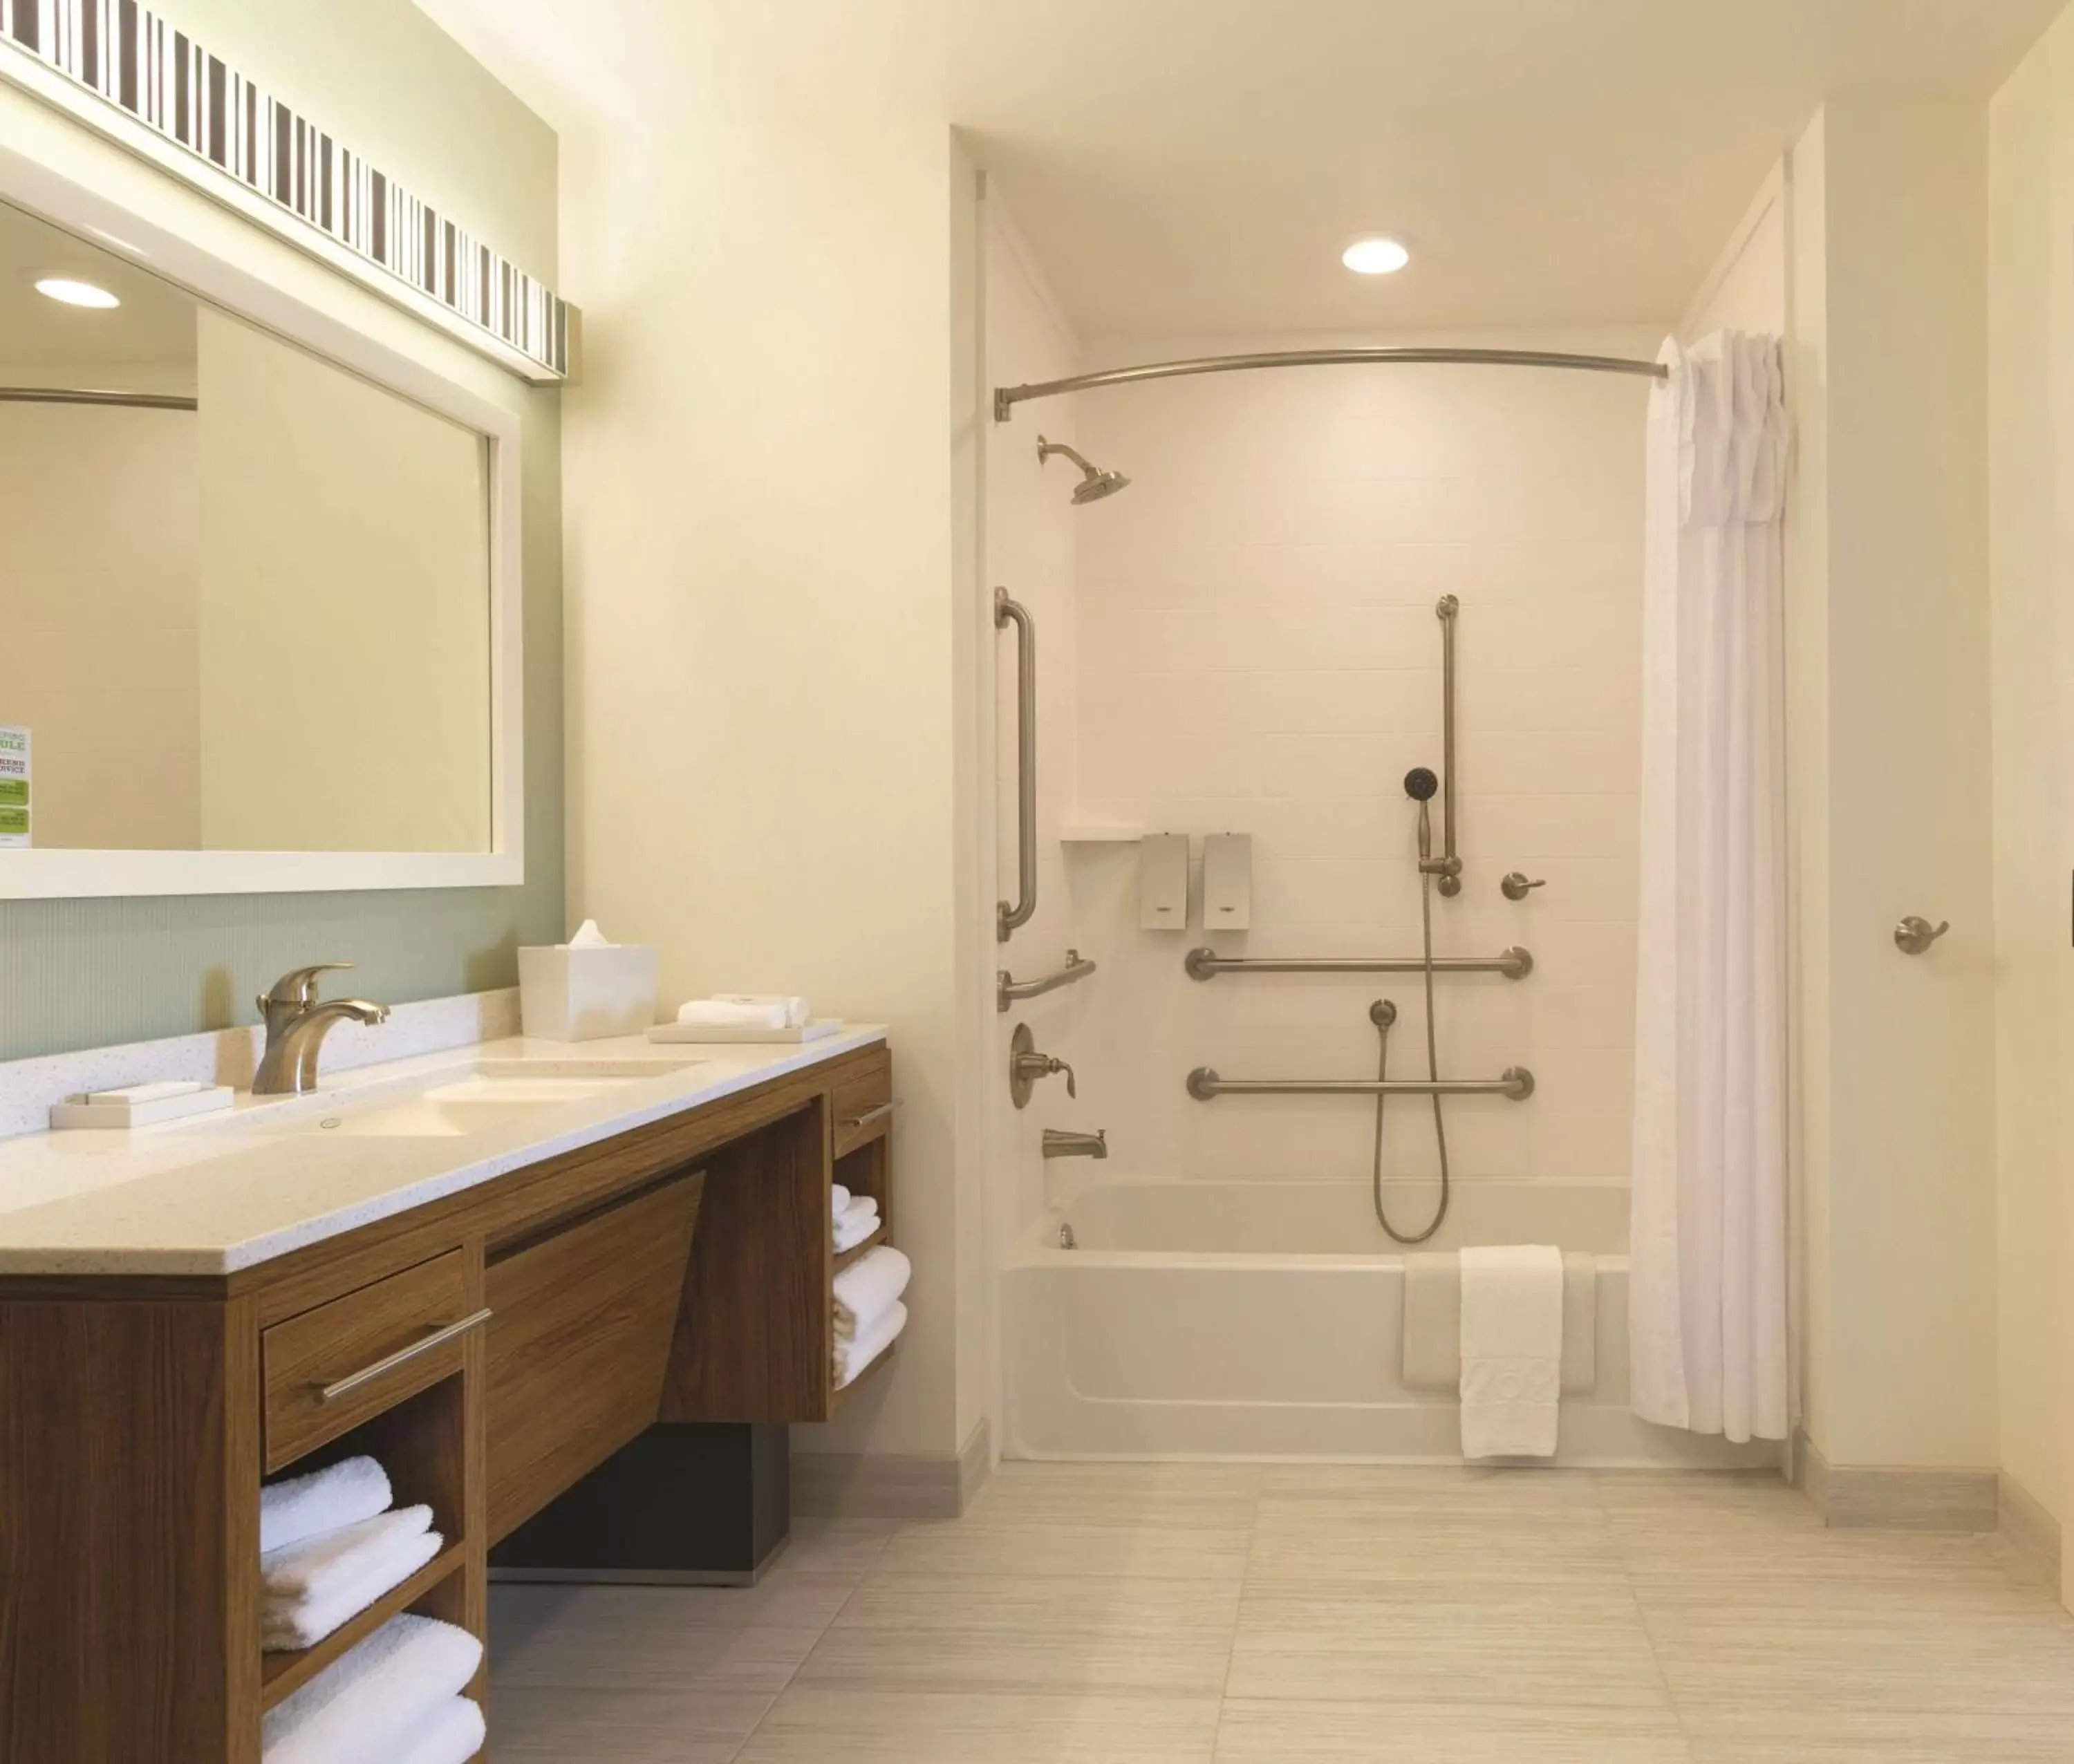 Bathroom in Home2 Suites by Hilton Bellingham